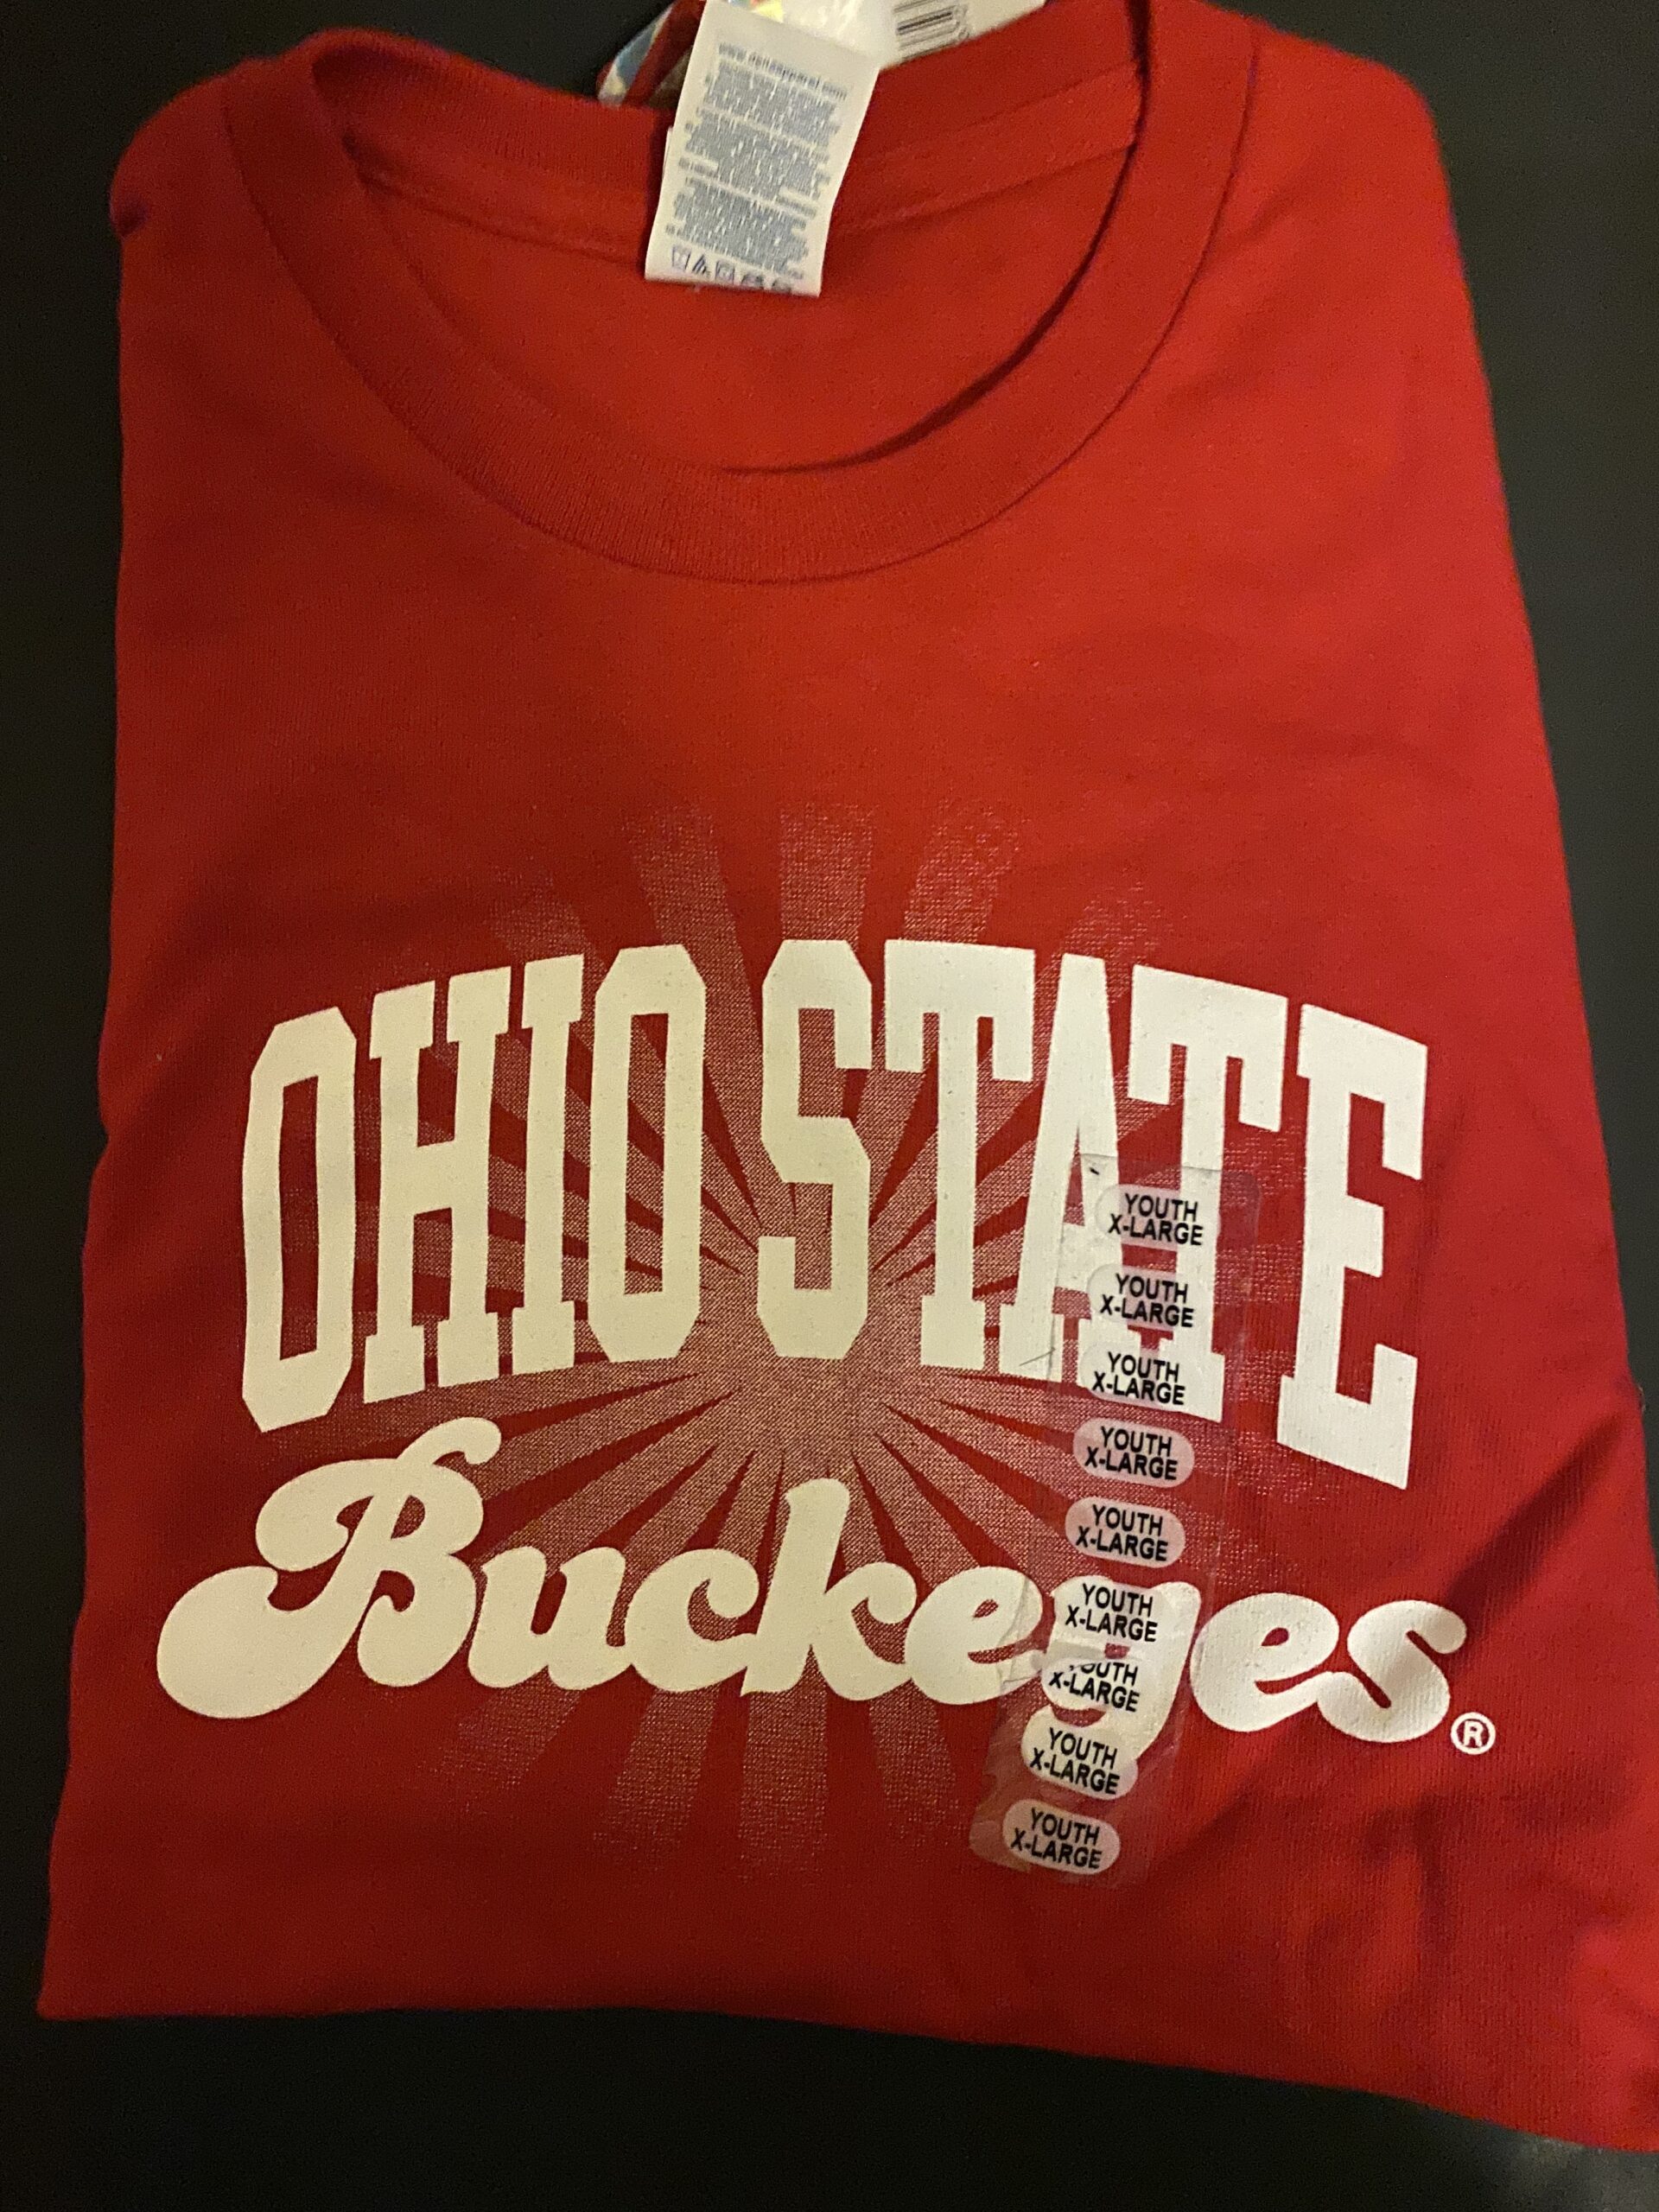 Ohio State Buckeyes (youth XL) T-shirt